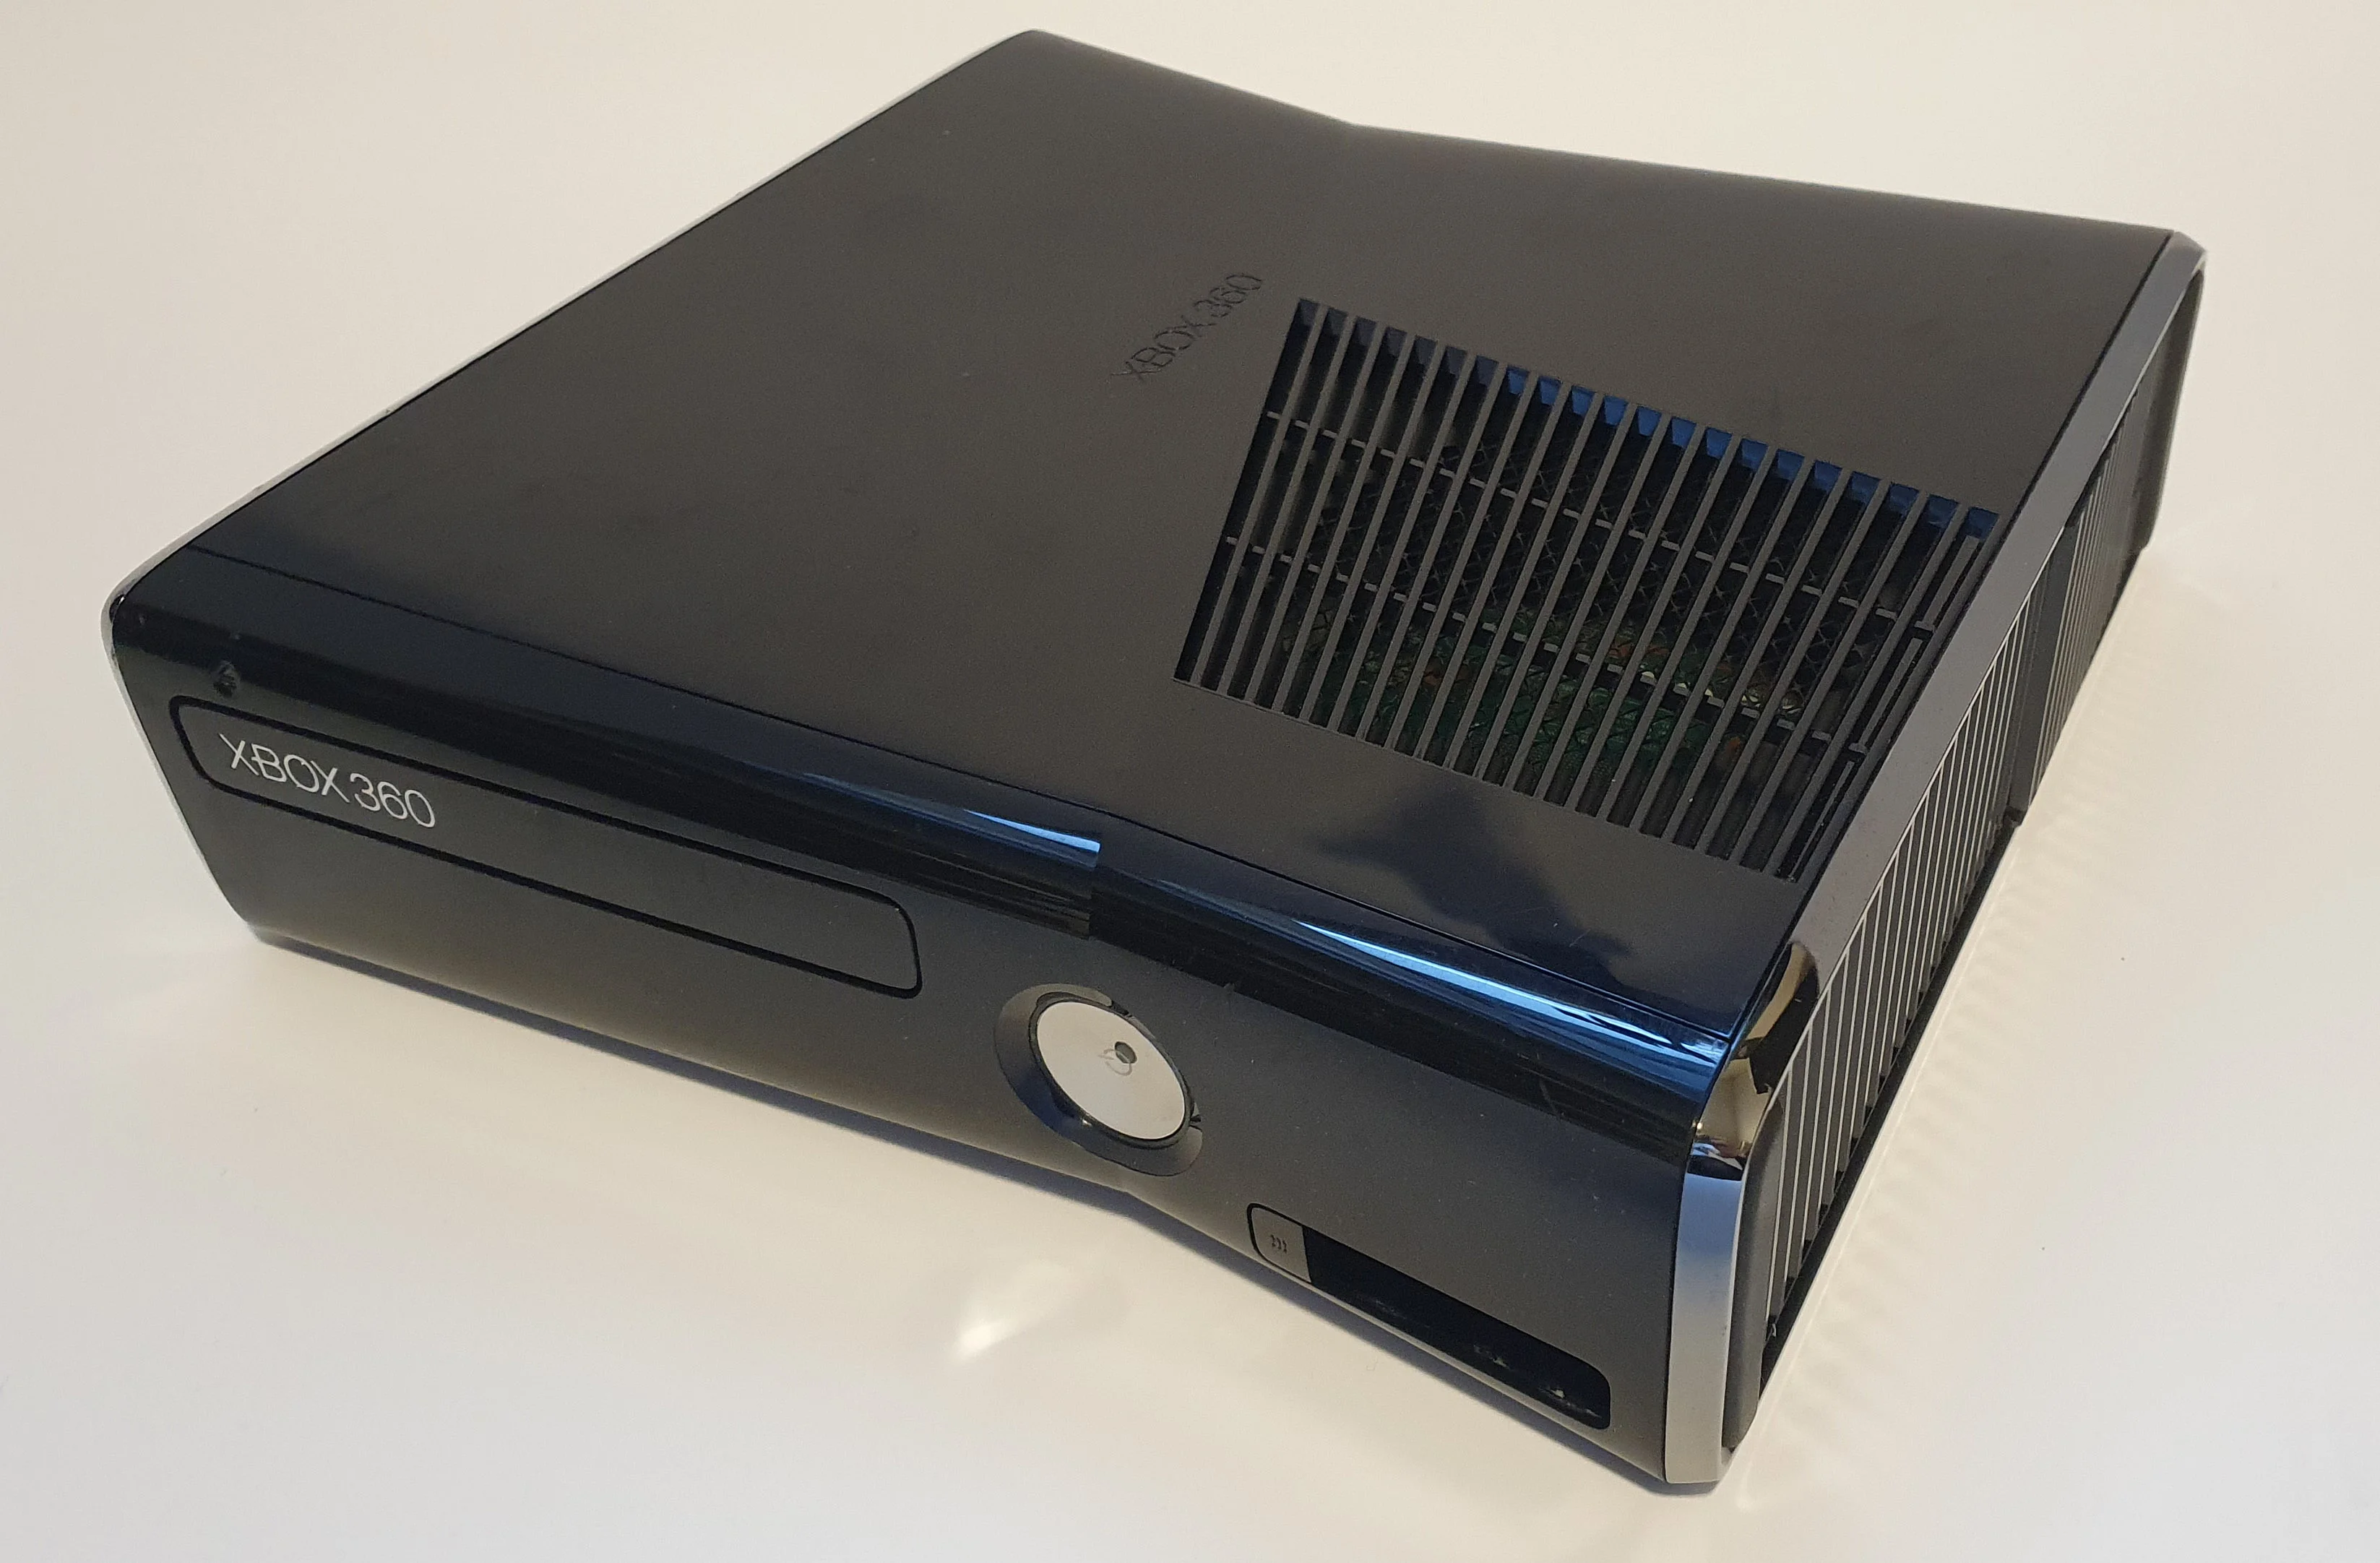  Microsoft Xbox 360 Slim Dummy Prototype Console